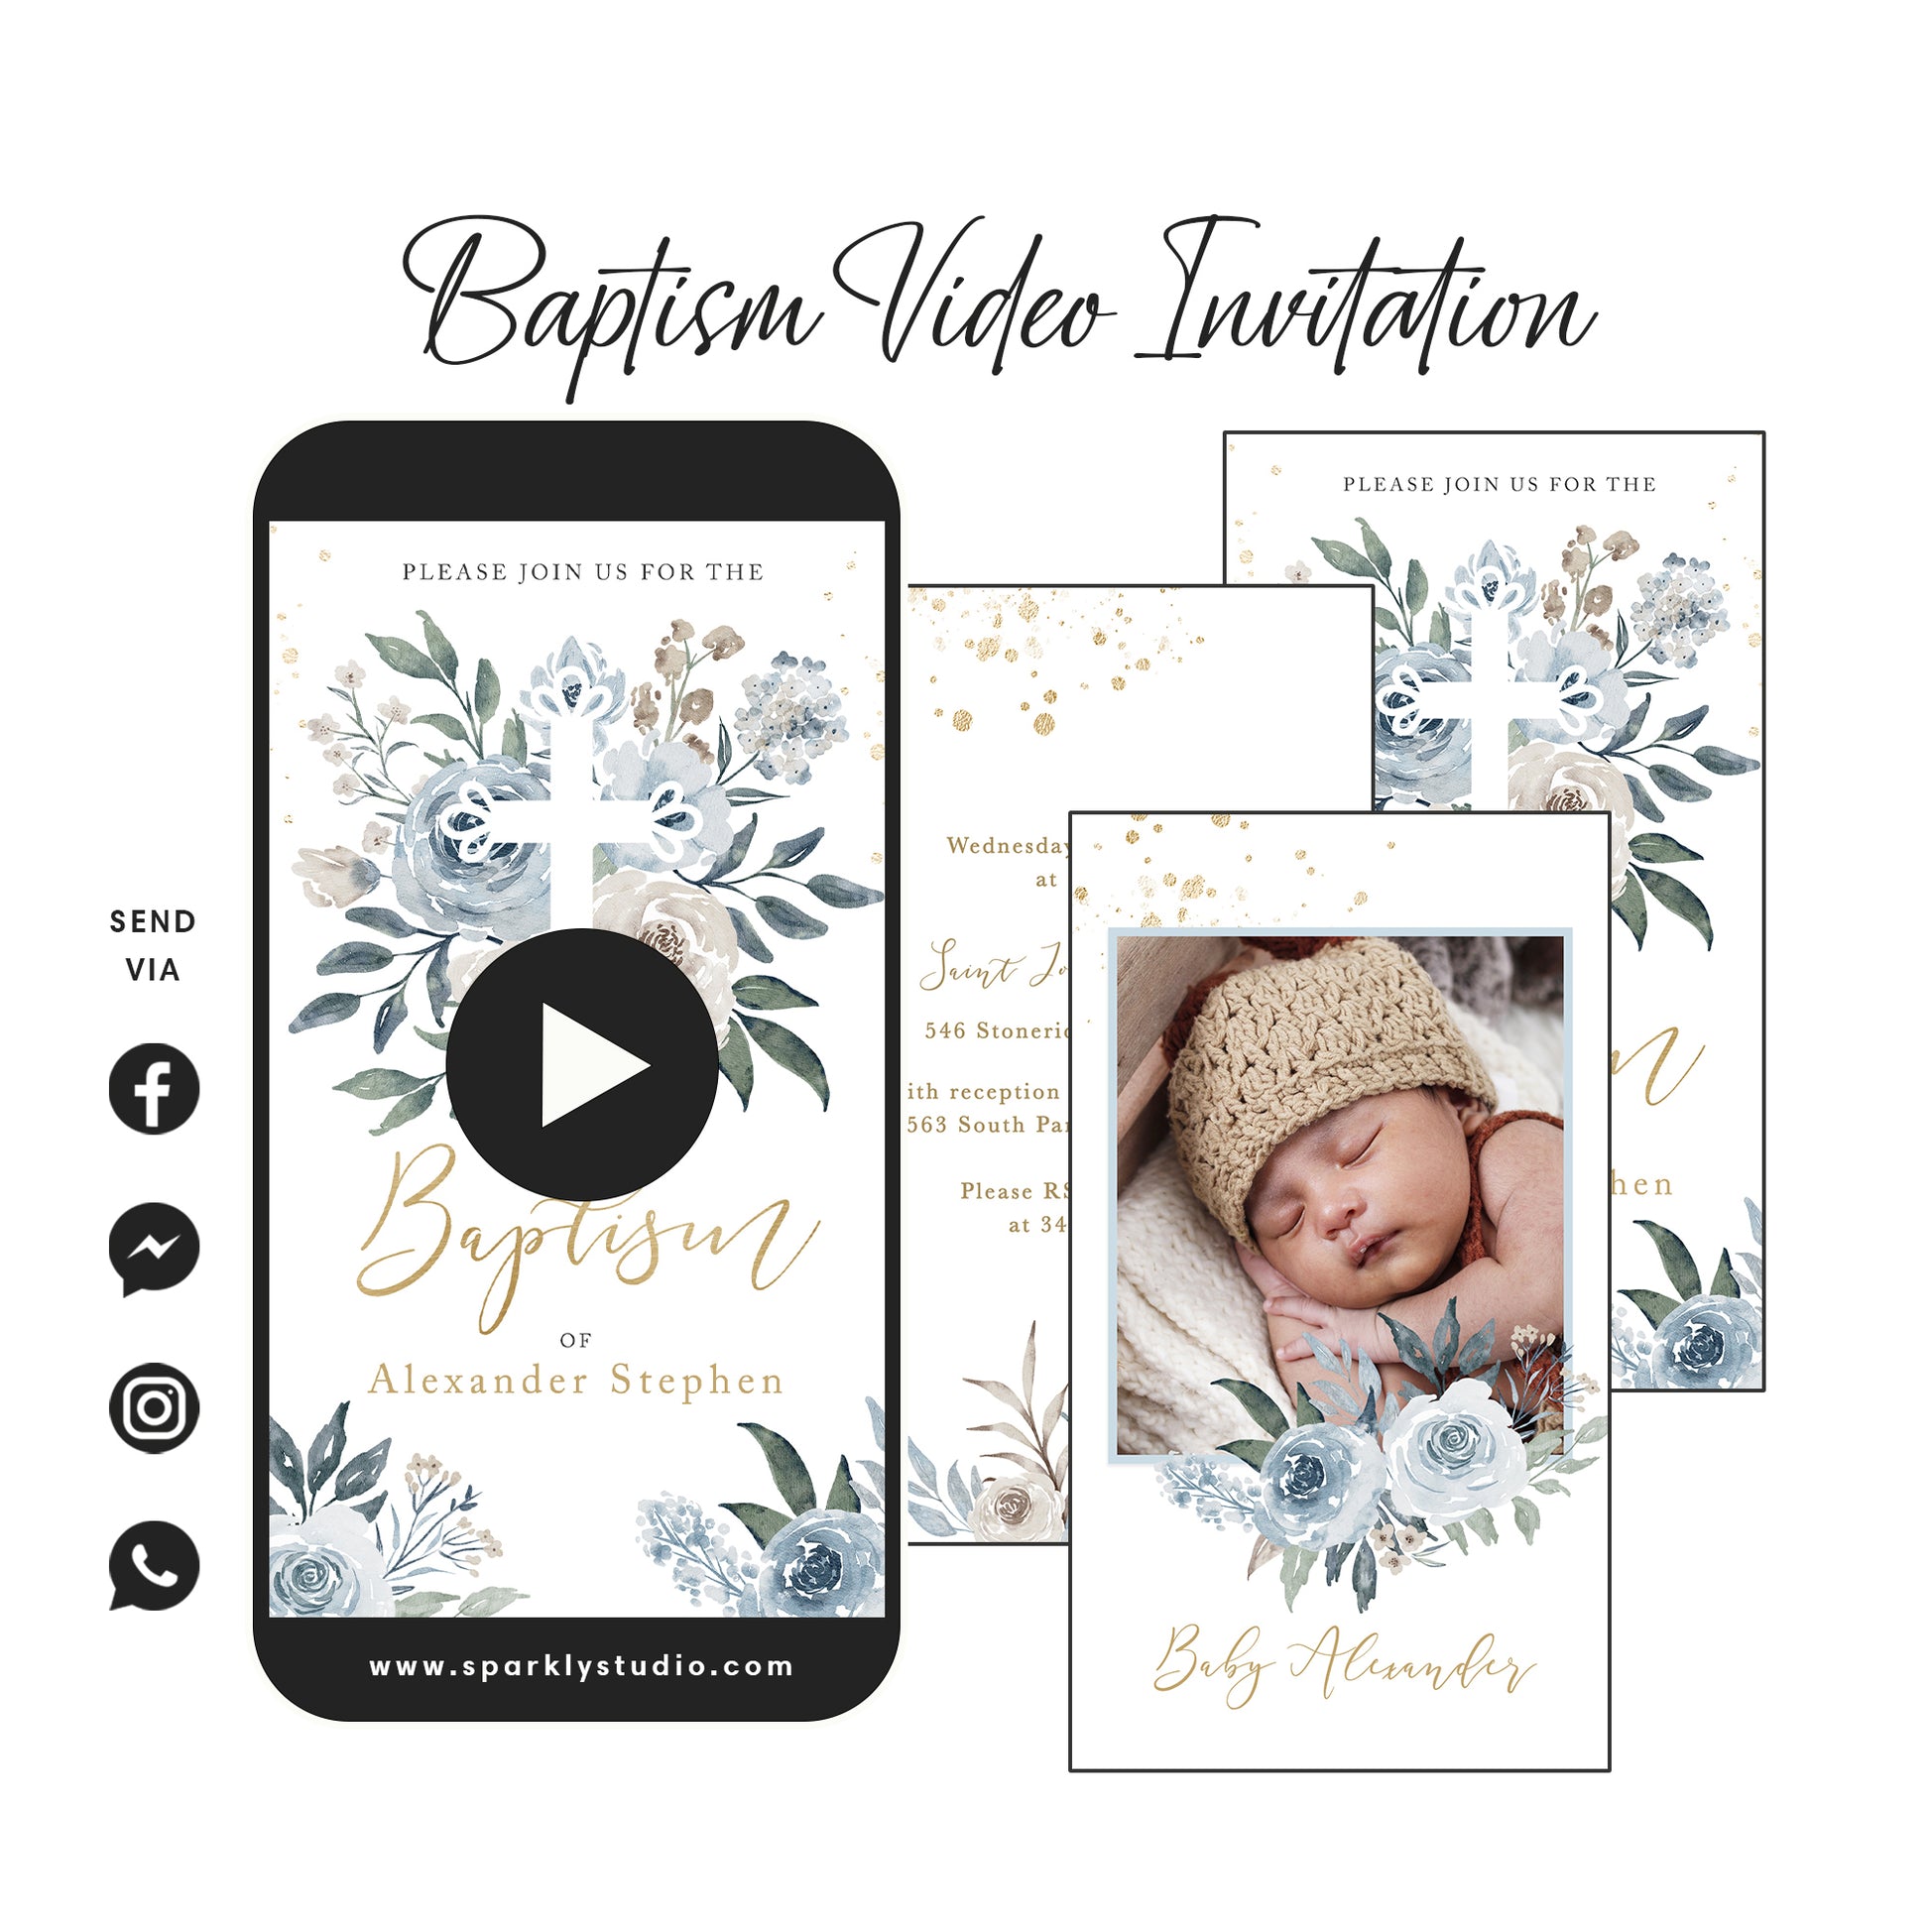 baptism video invitation